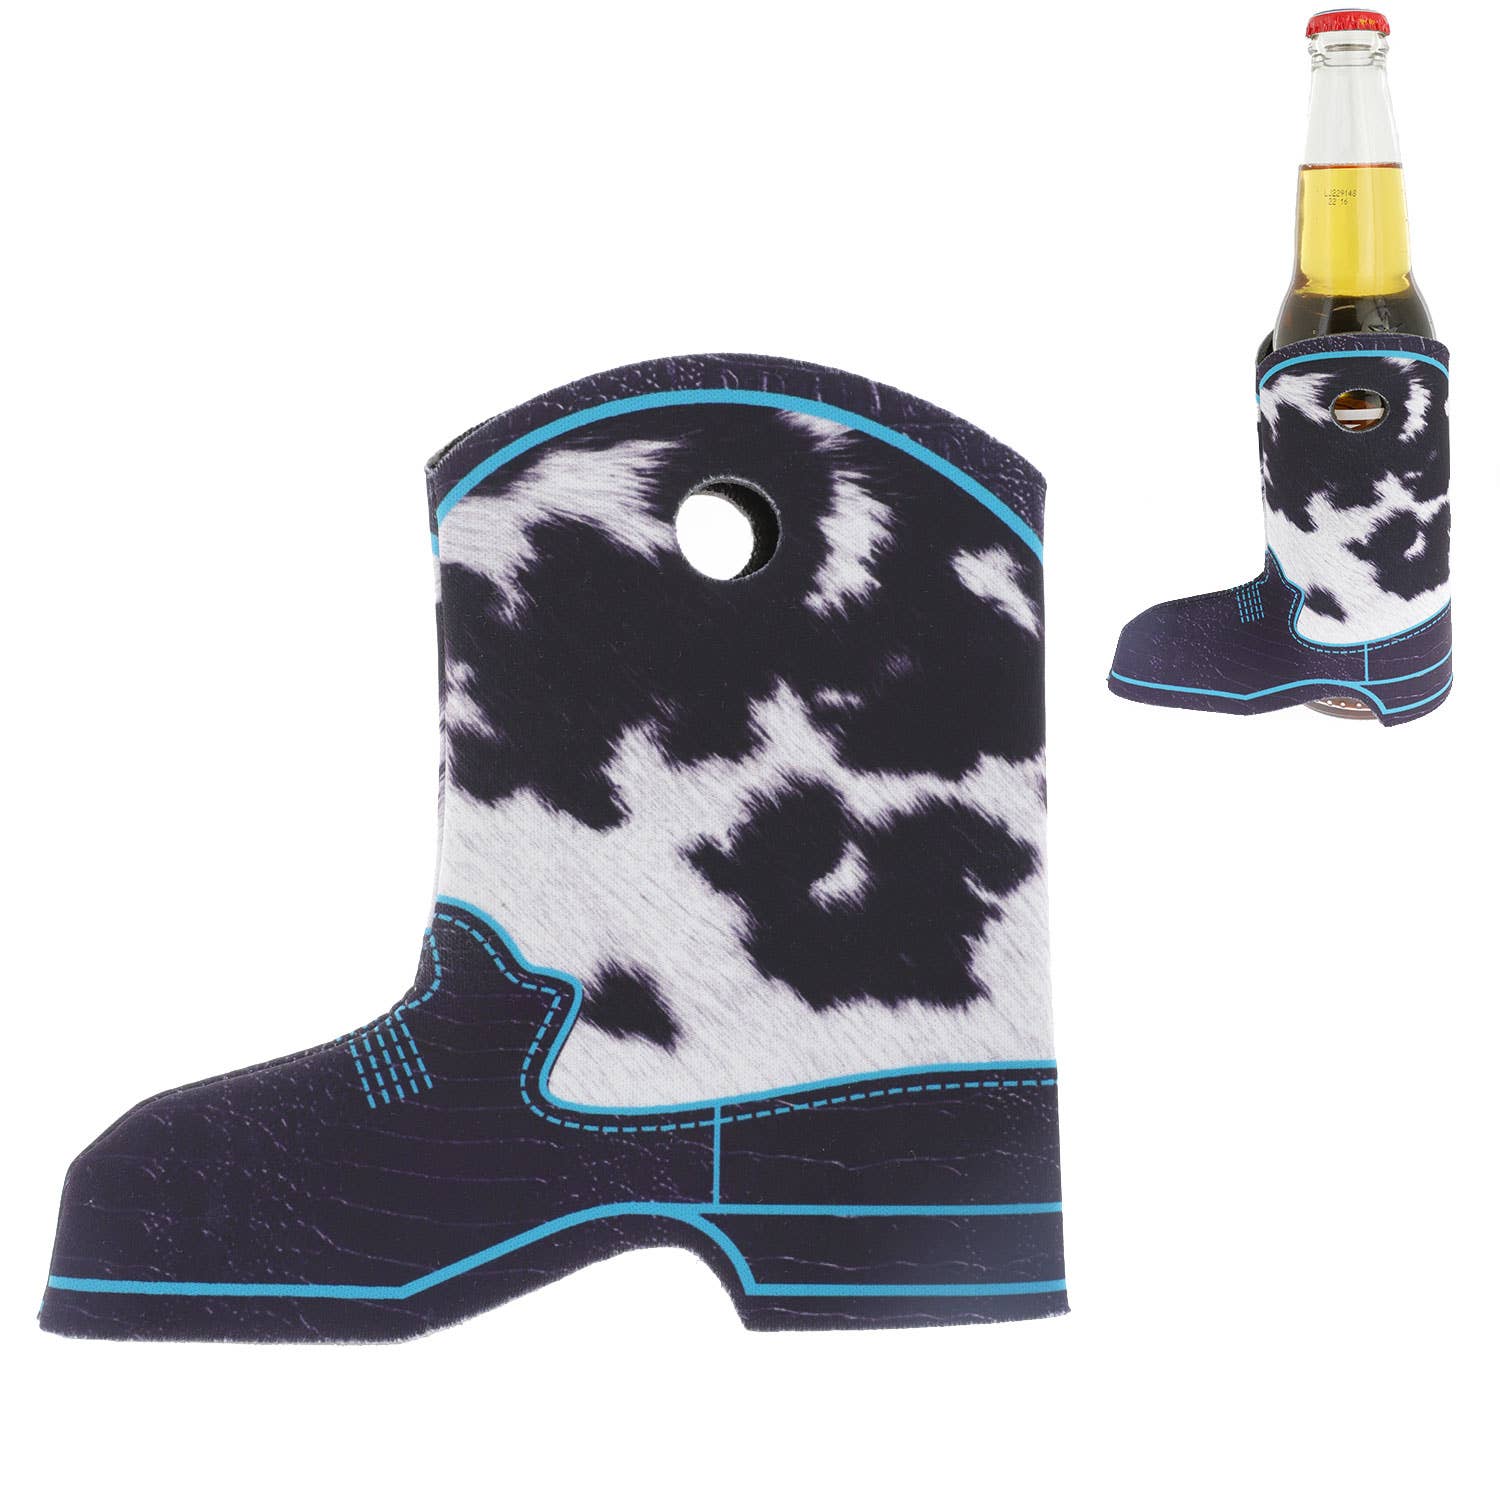 Cowboy Boot Coolie, Snakeskin Print Beer Cooler Sleeve – Winding Brook  Ranch, Tipsy Totes Gifts, Wine Gifts, Beer Koozies